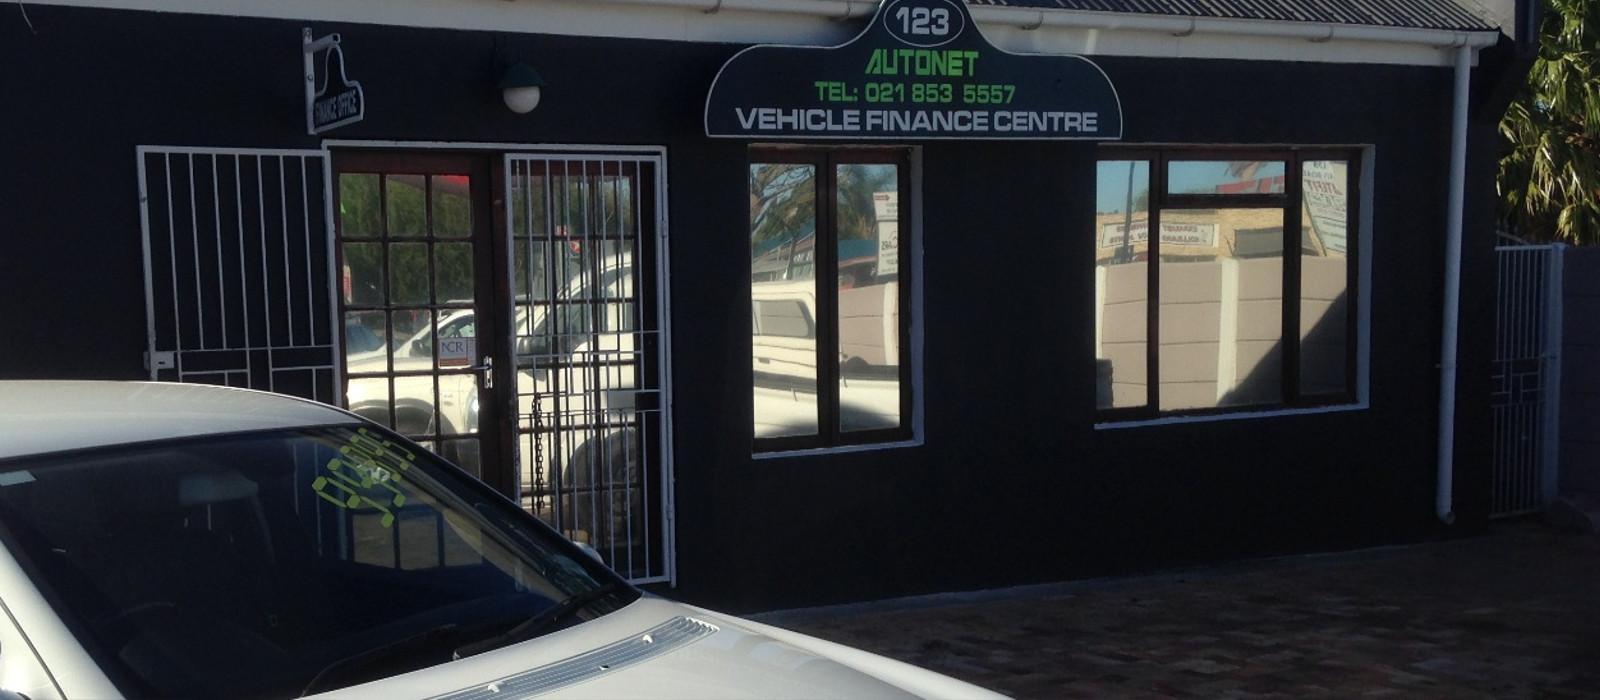 Vehicle Finance Service Provider